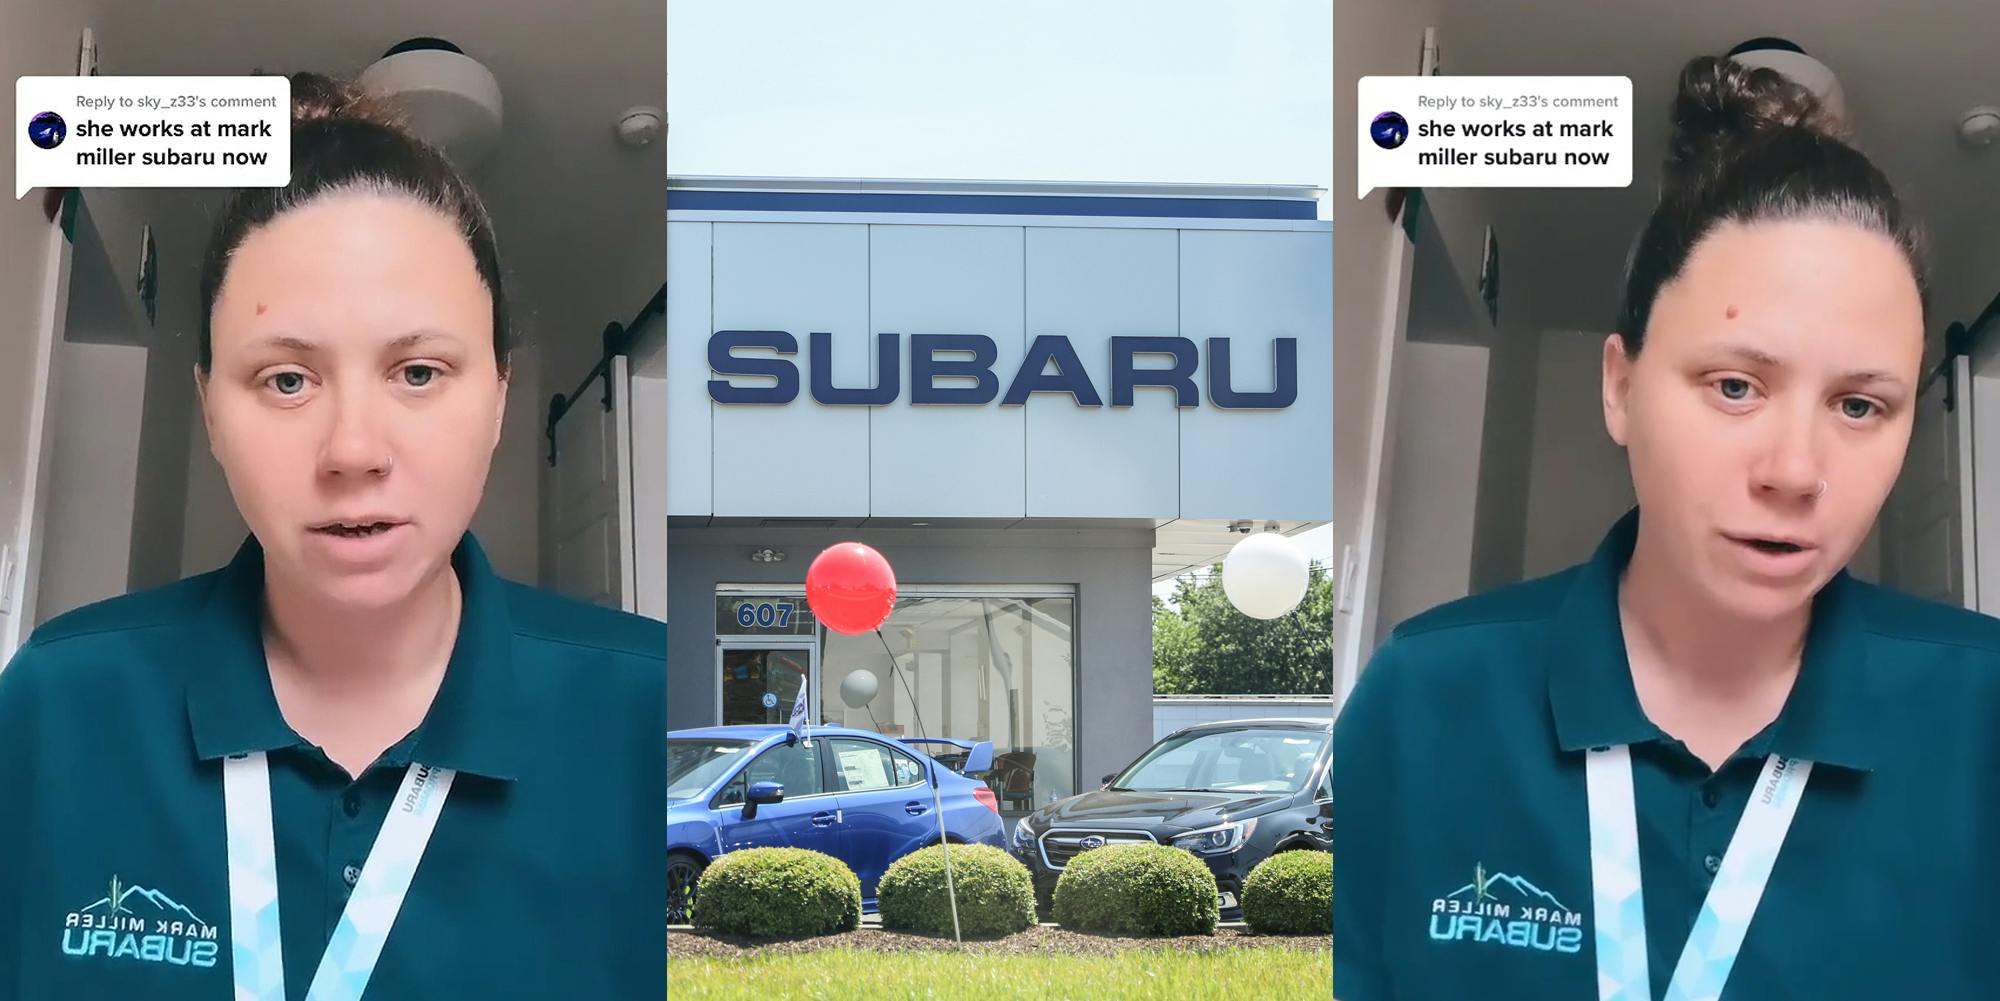 Subaru dealership worker in uniform speaking caption "she works at mark miller subaru now" (l) Subaru dealership (c) Subaru dealership worker in uniform speaking caption "she works at mark miller subaru now" (r)